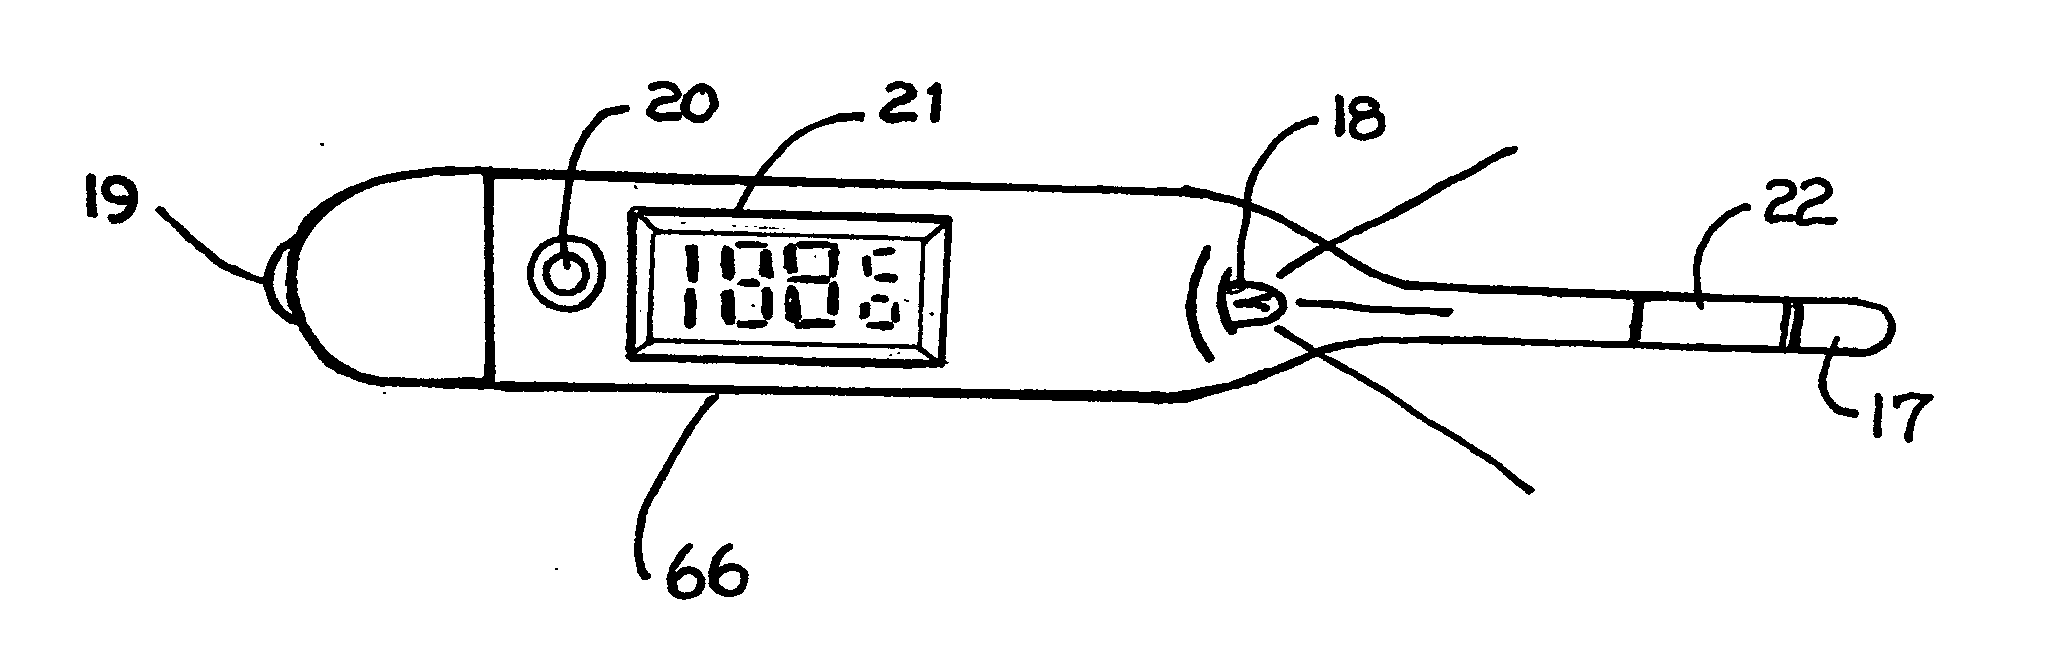 Temperature measure device